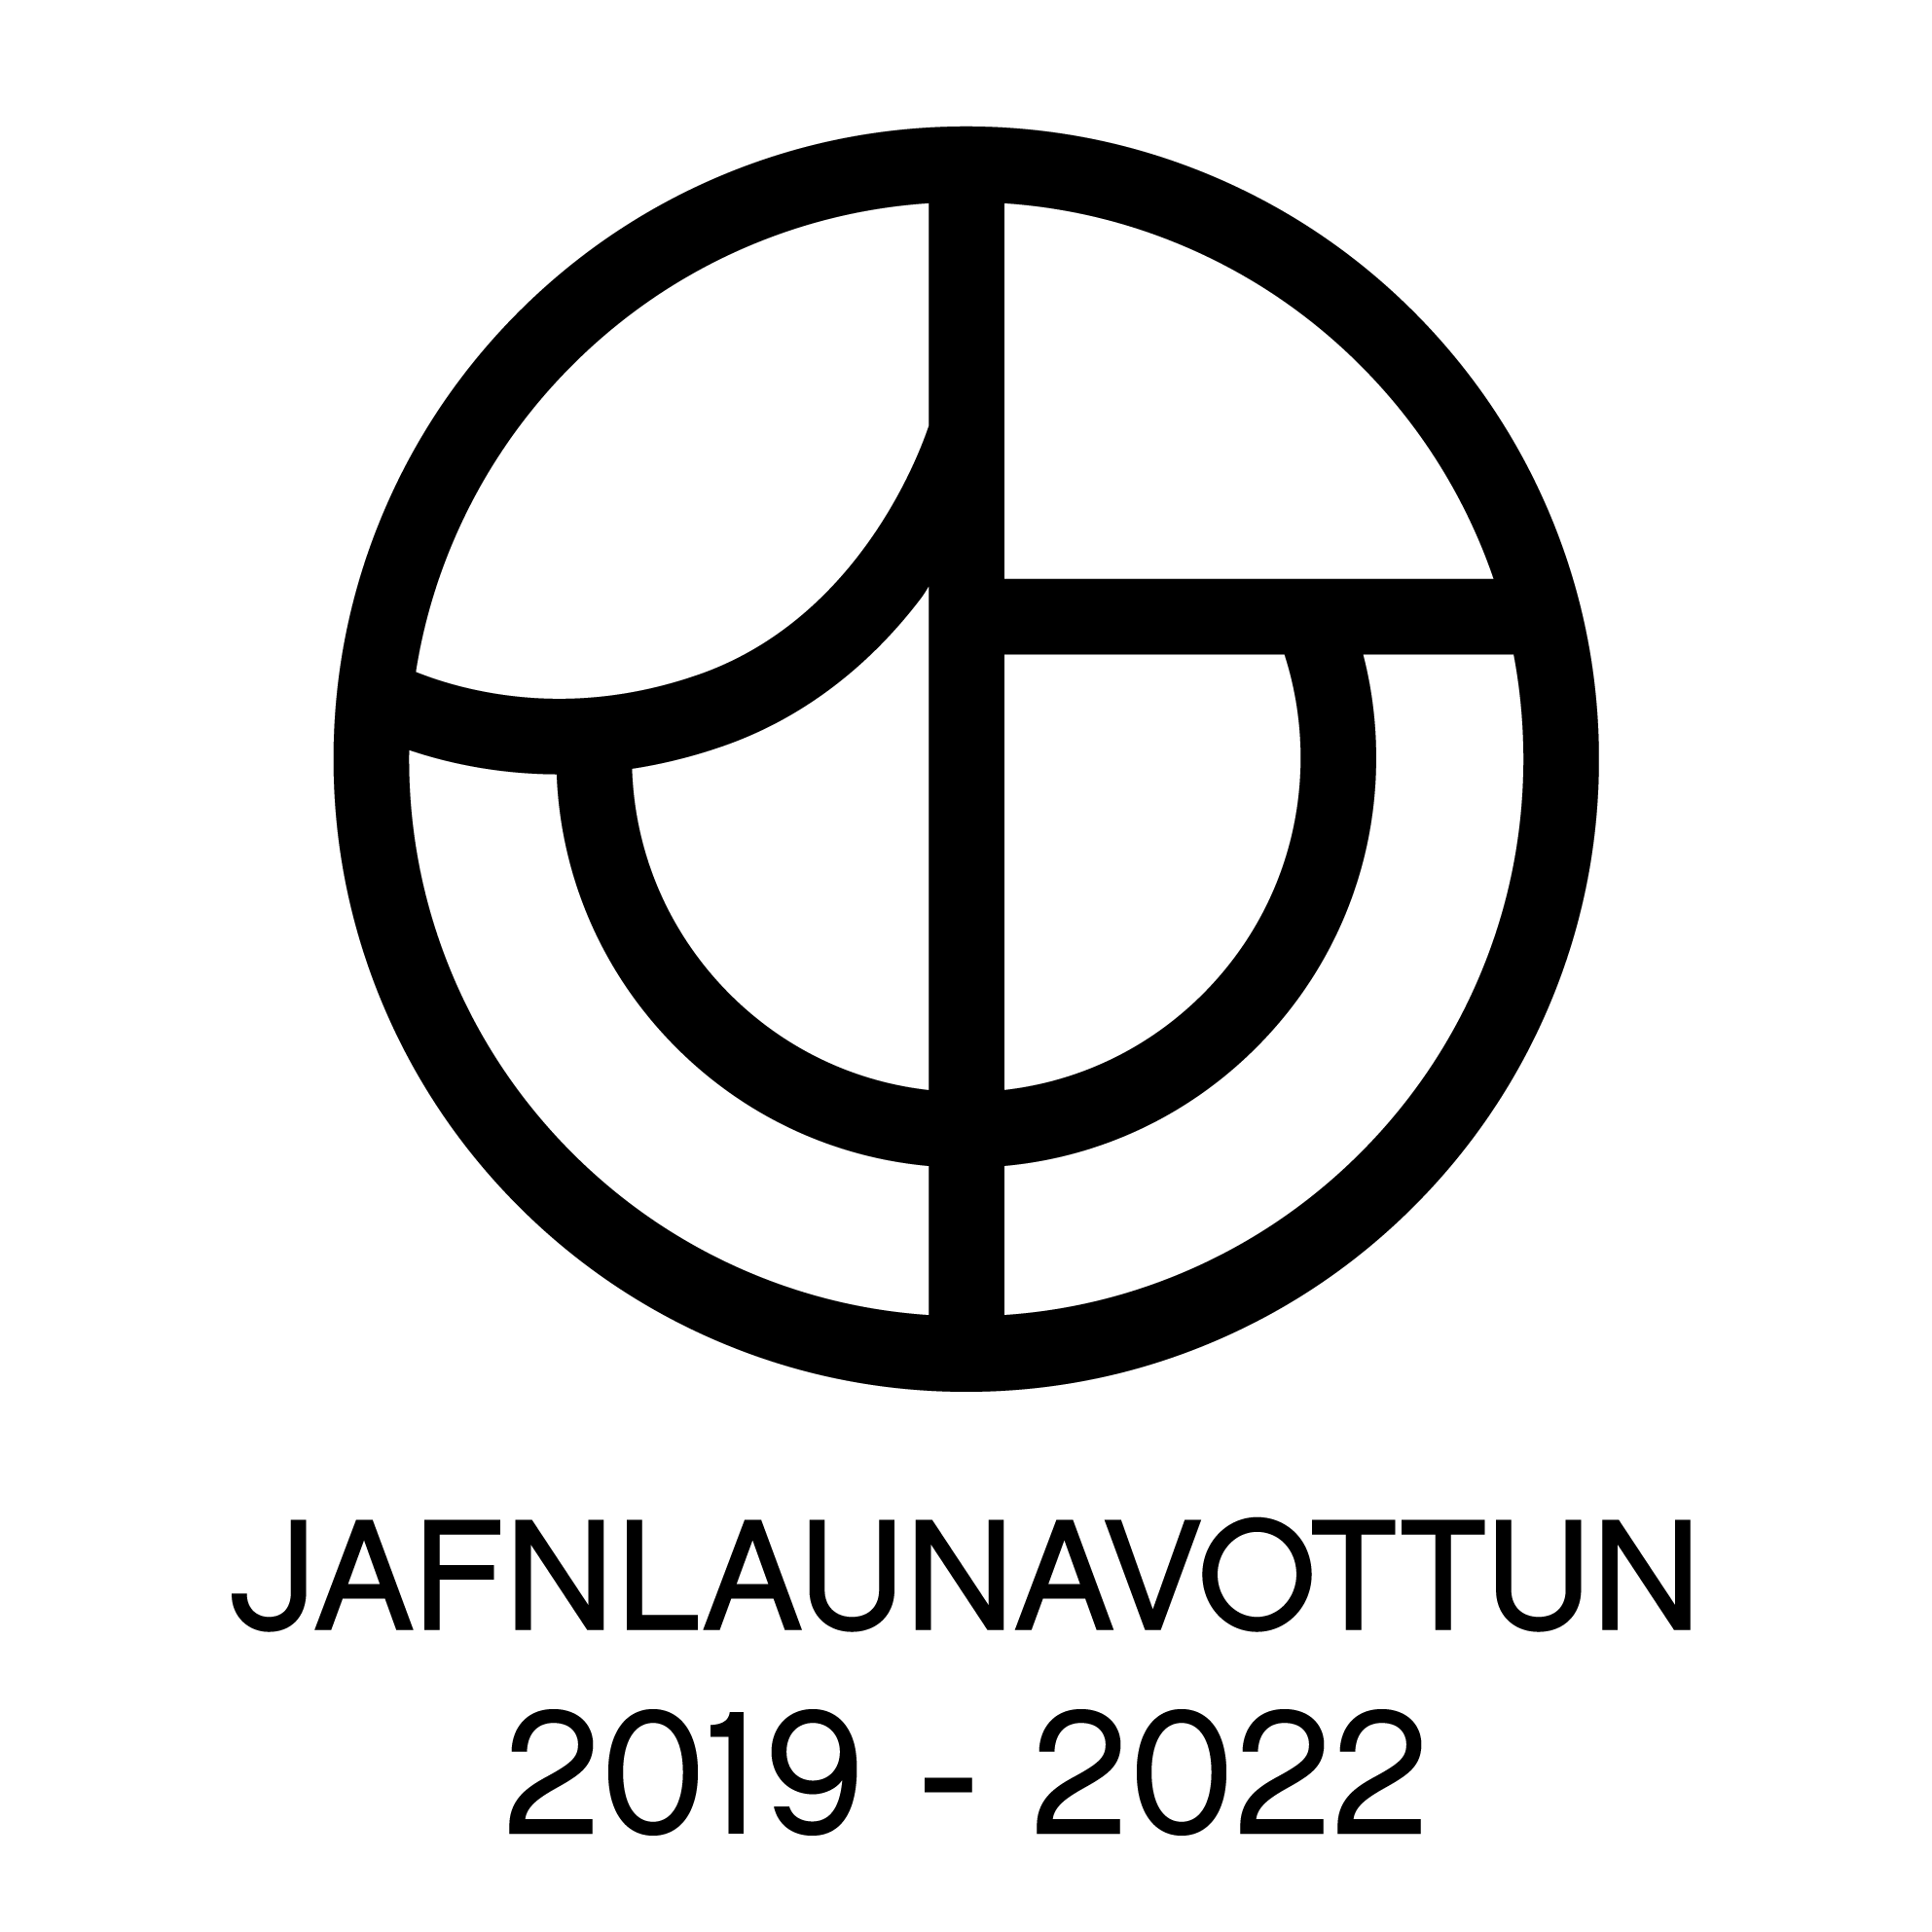 A round logo with text reading "JAFNLAUNAVOTTUN 2019-2022